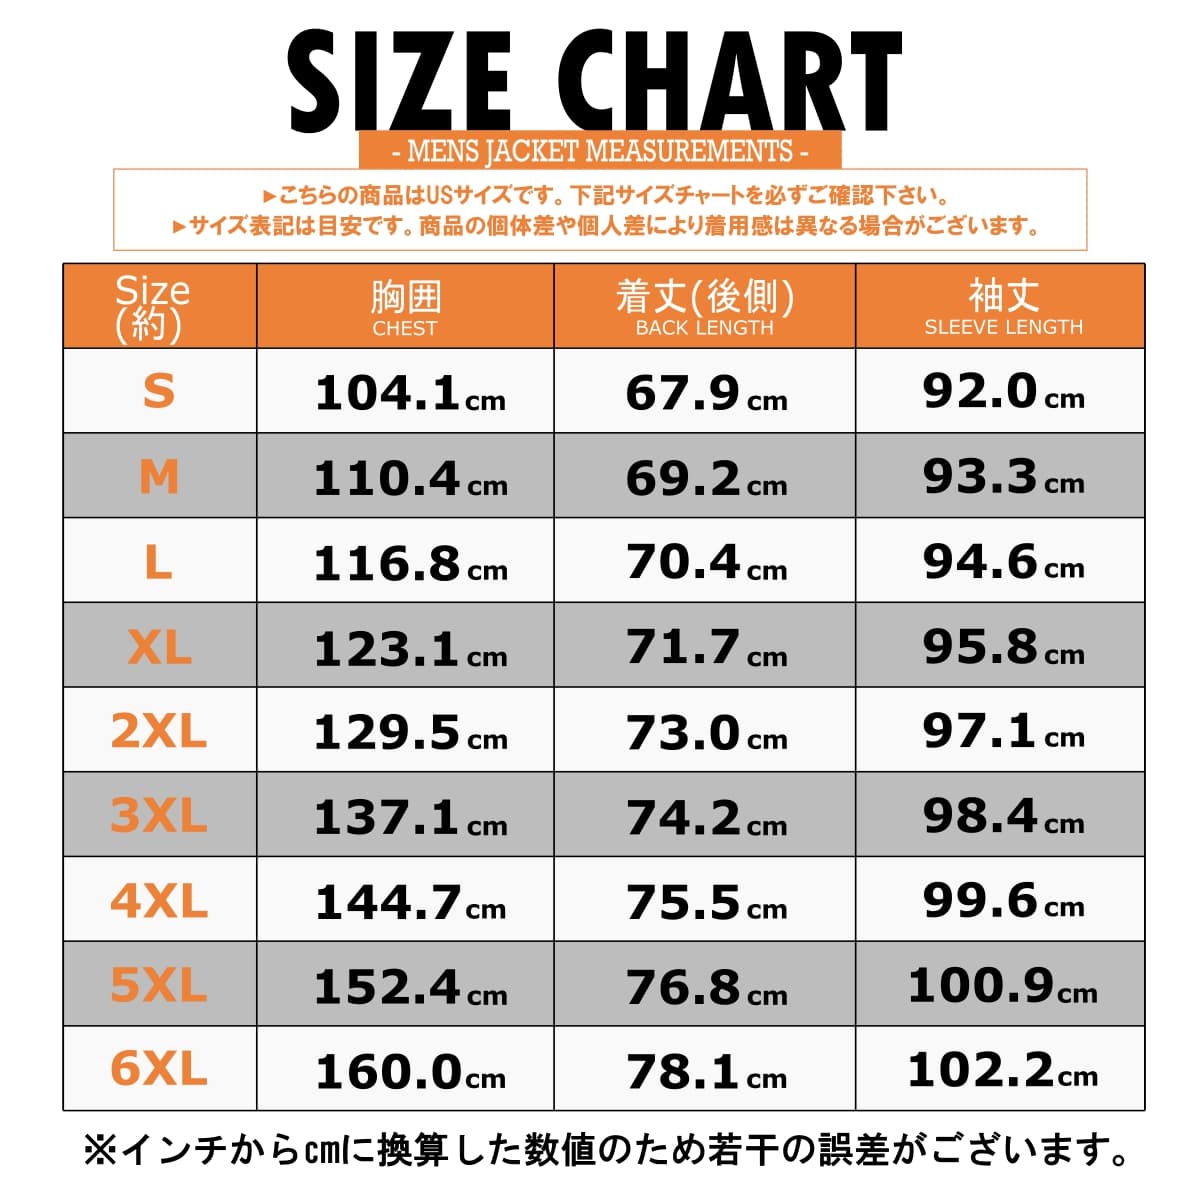 Xelement Motorcycle Jacket Size Chart